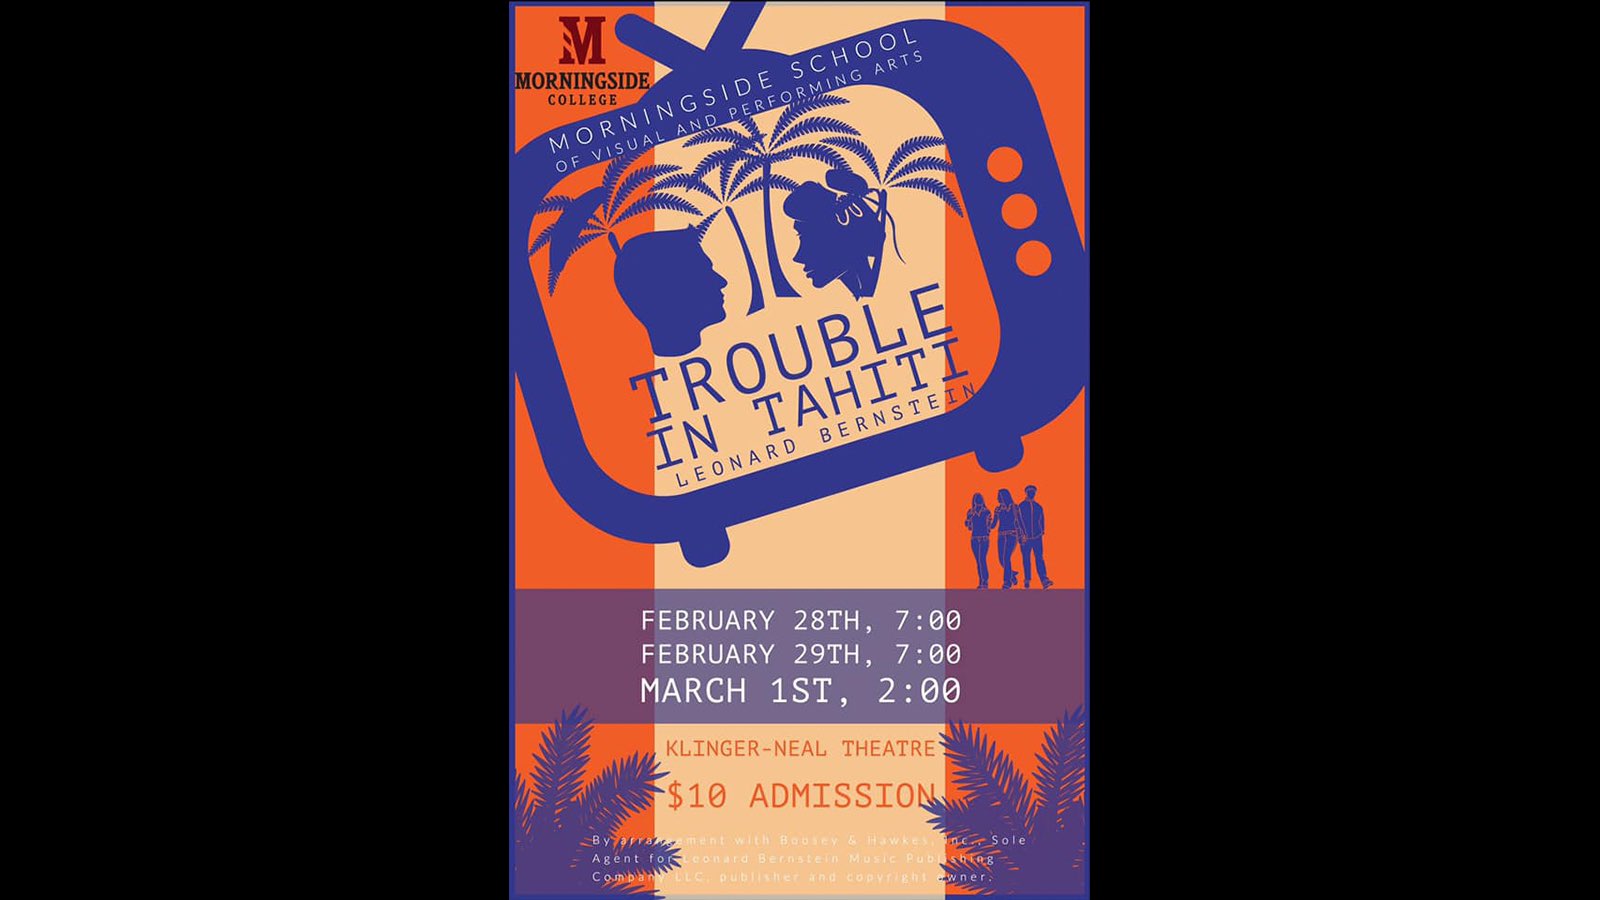 Trouble in Tahiti poster